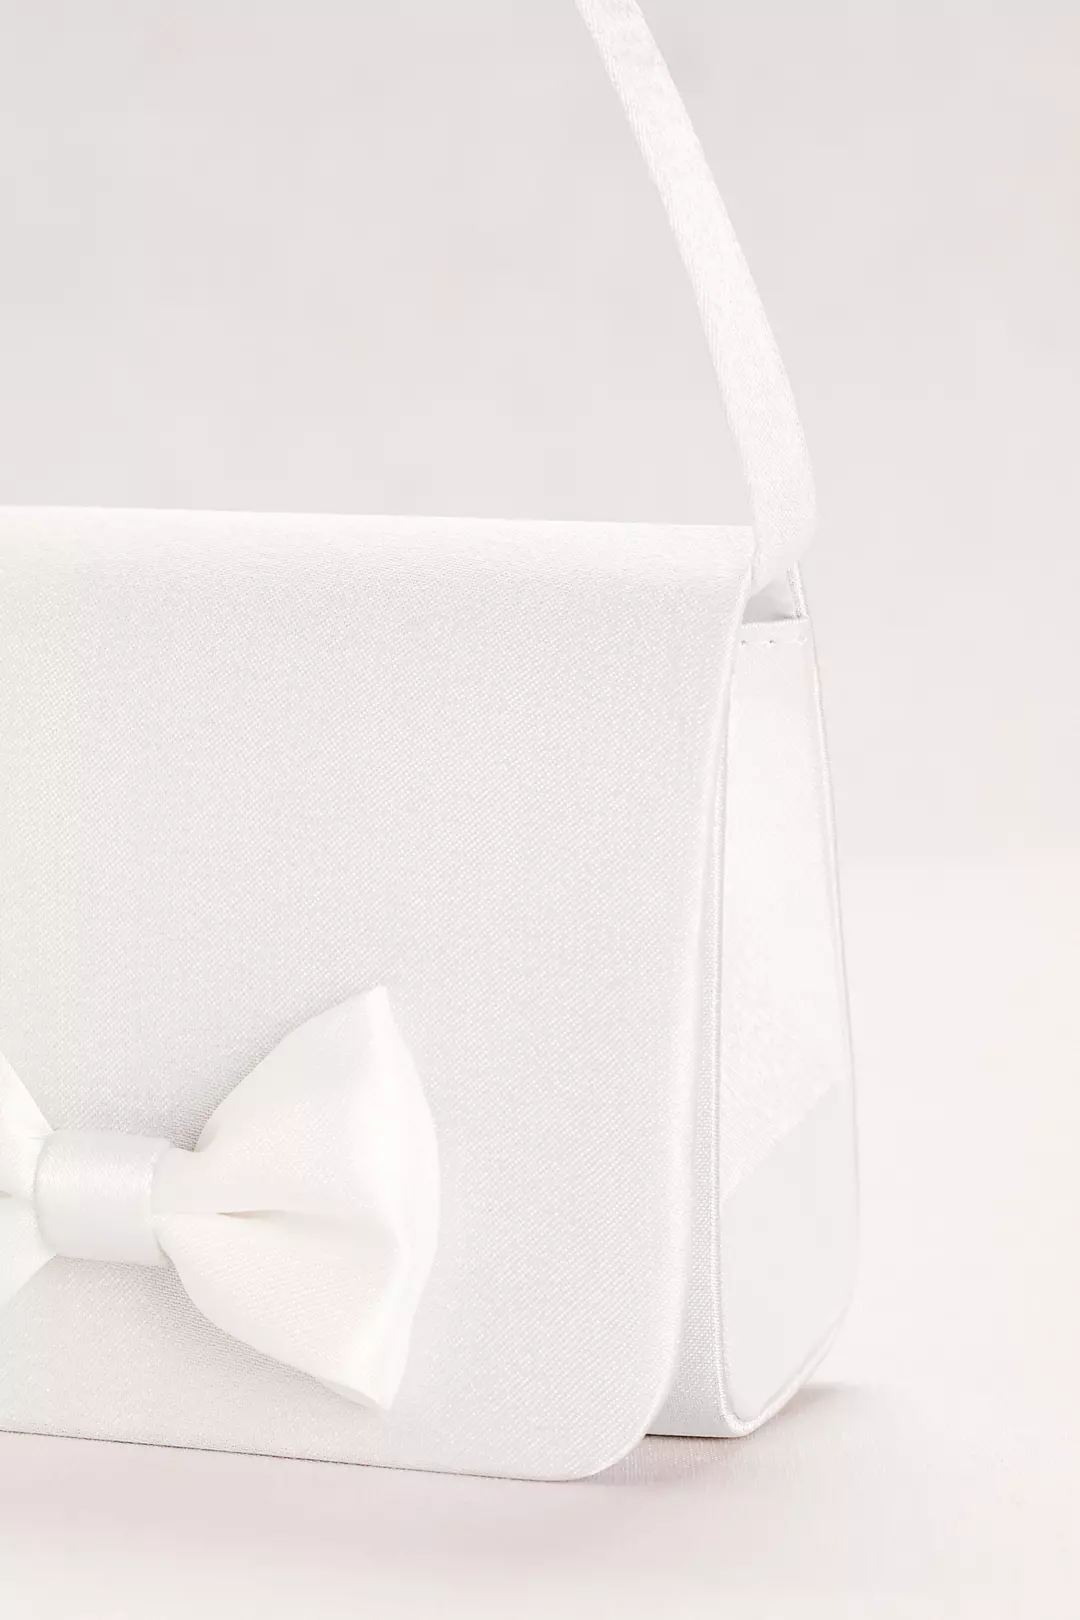 Satin Flower Girl Handbag with Bow Detail Image 3